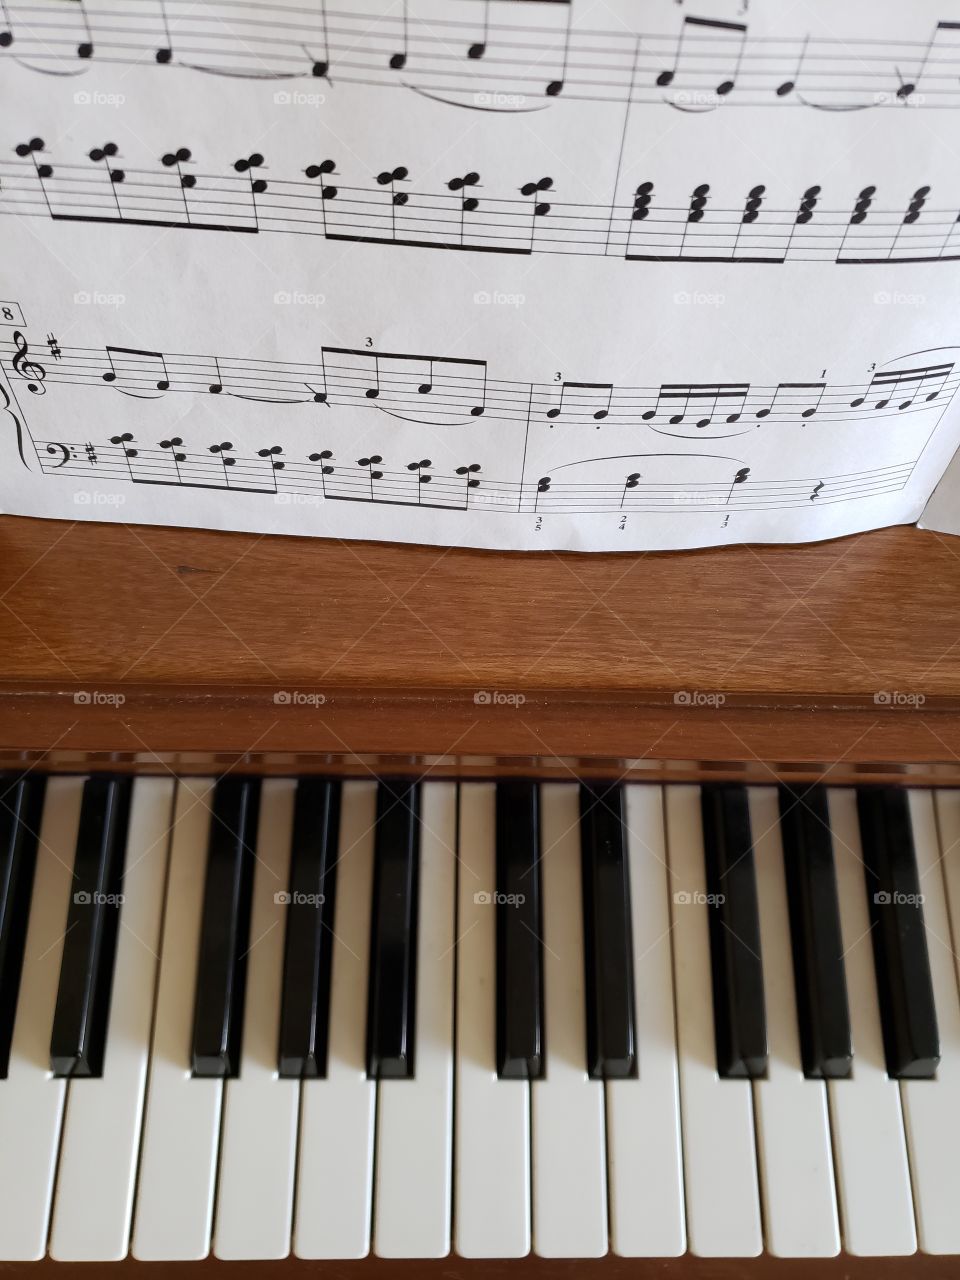 Piano music and keys